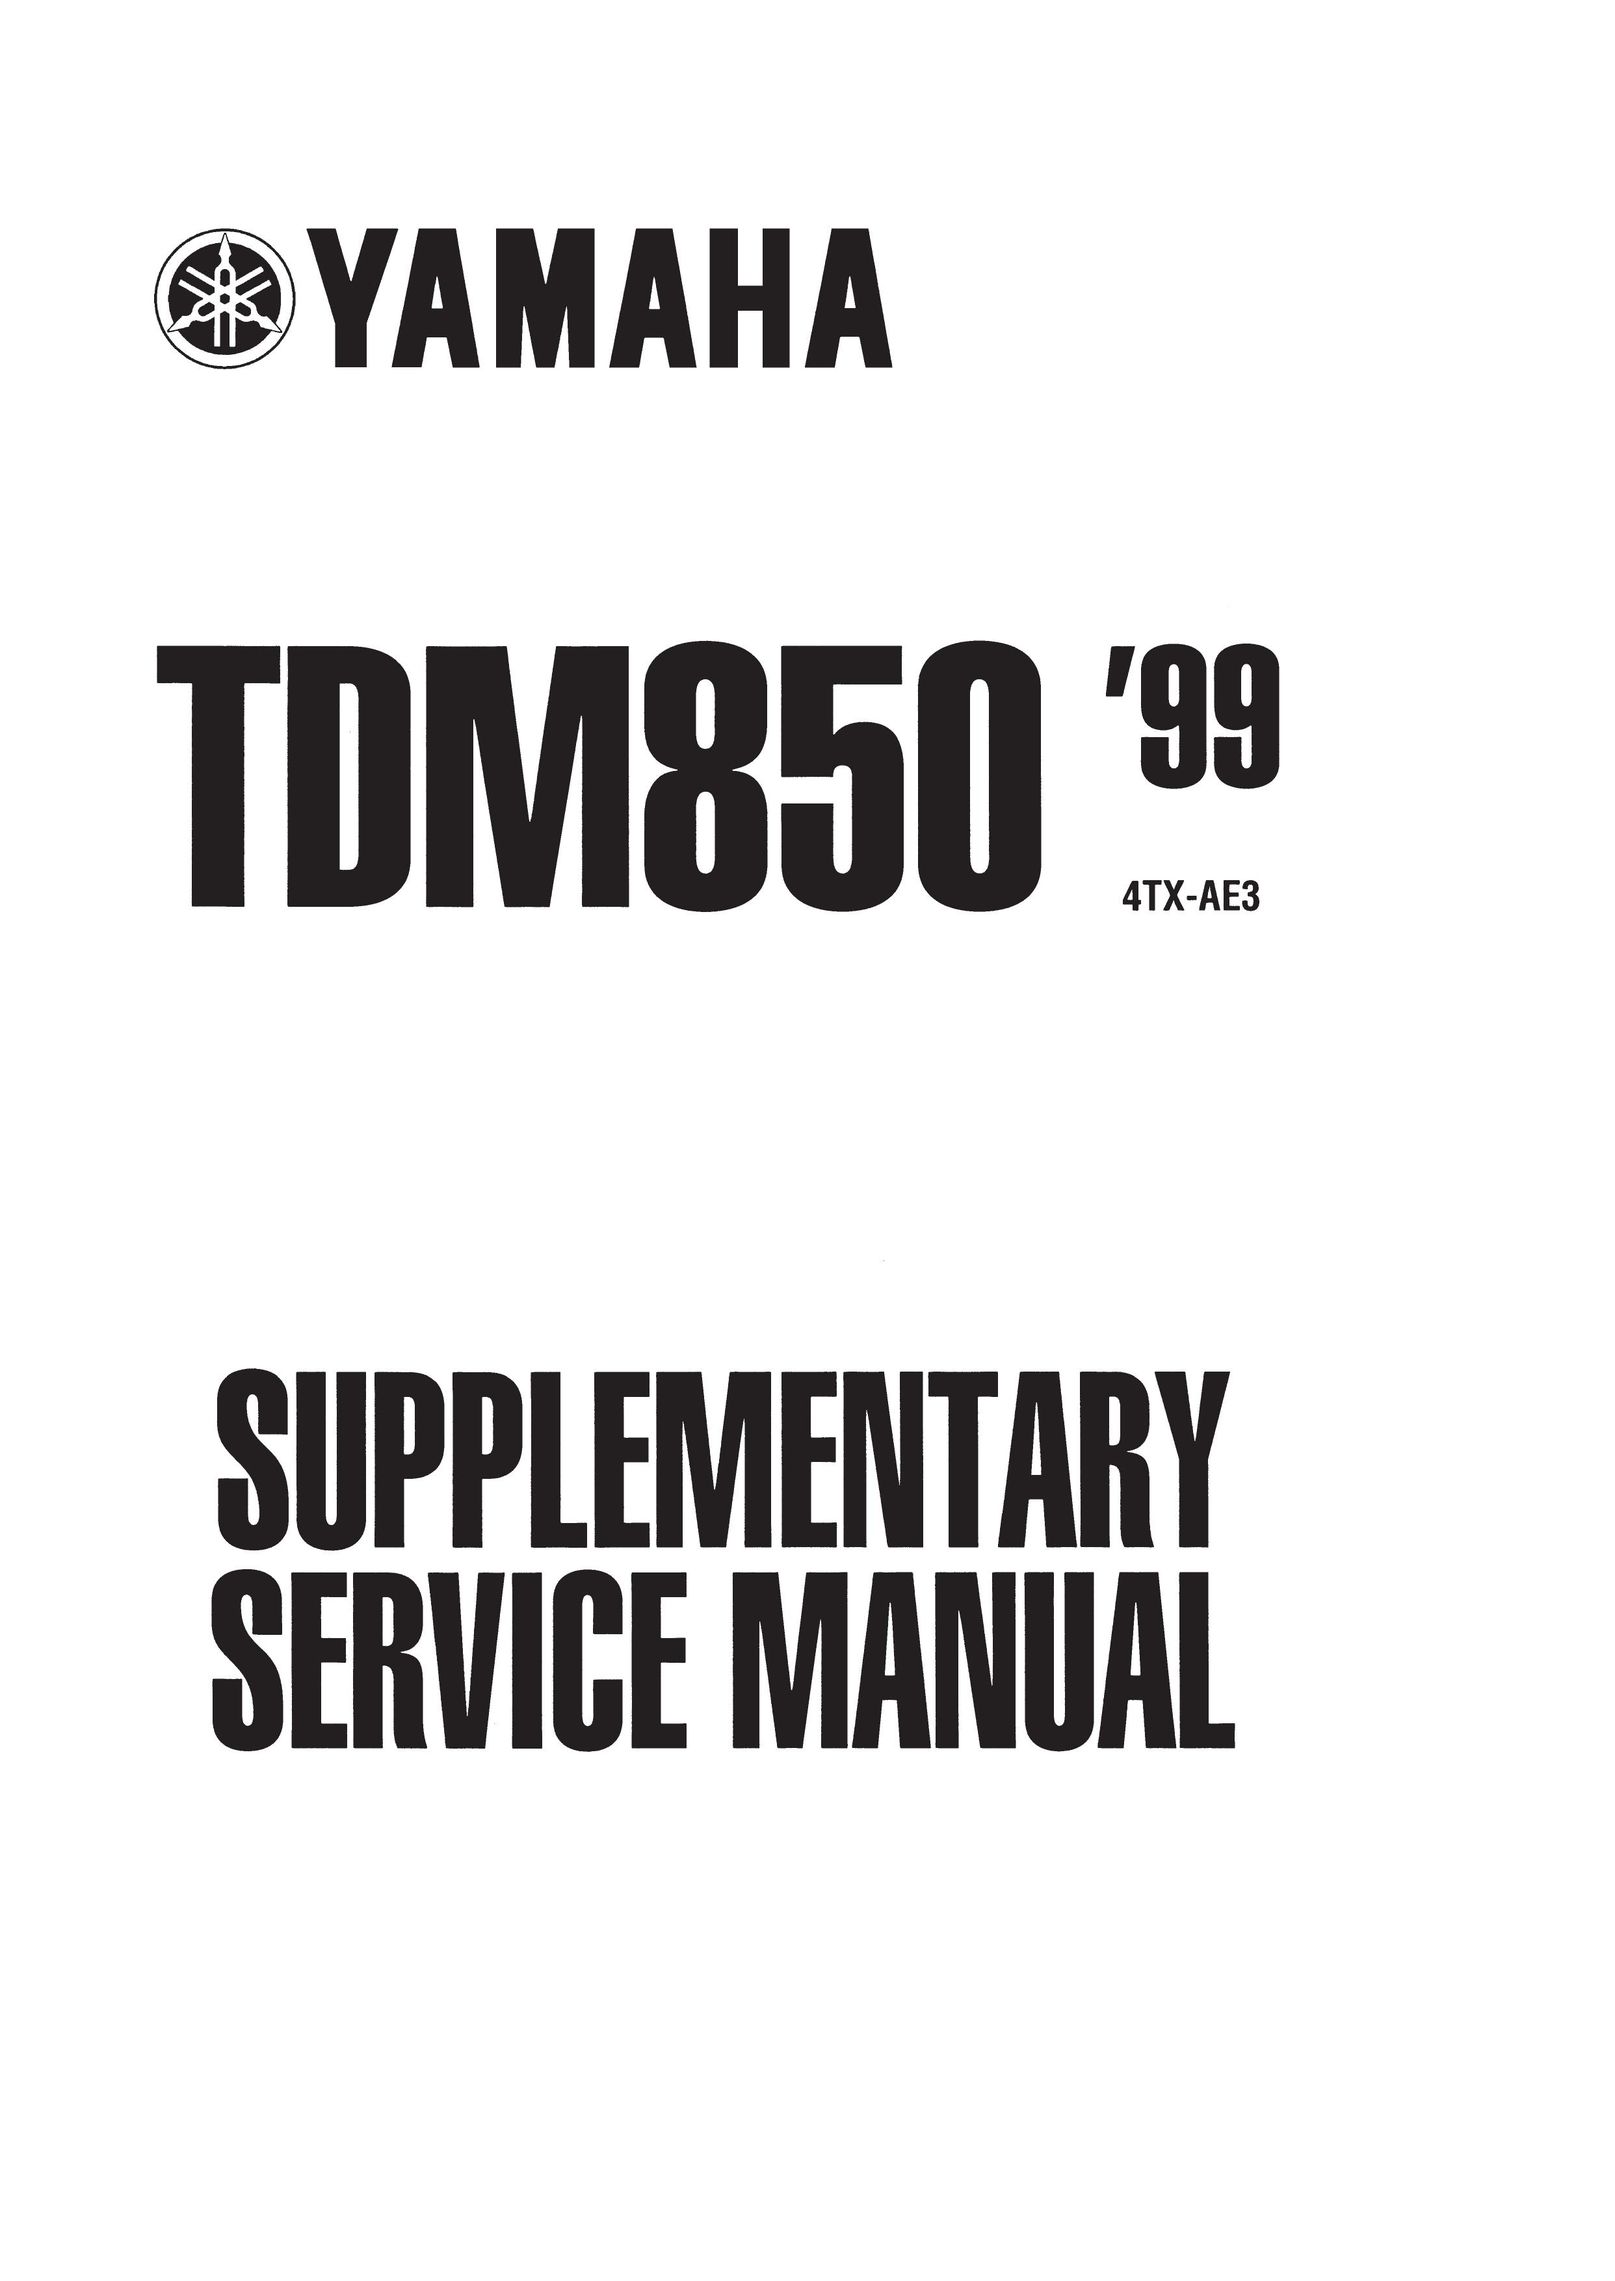 Yamaha 4TX-AE3 Two-Way Radio User Manual